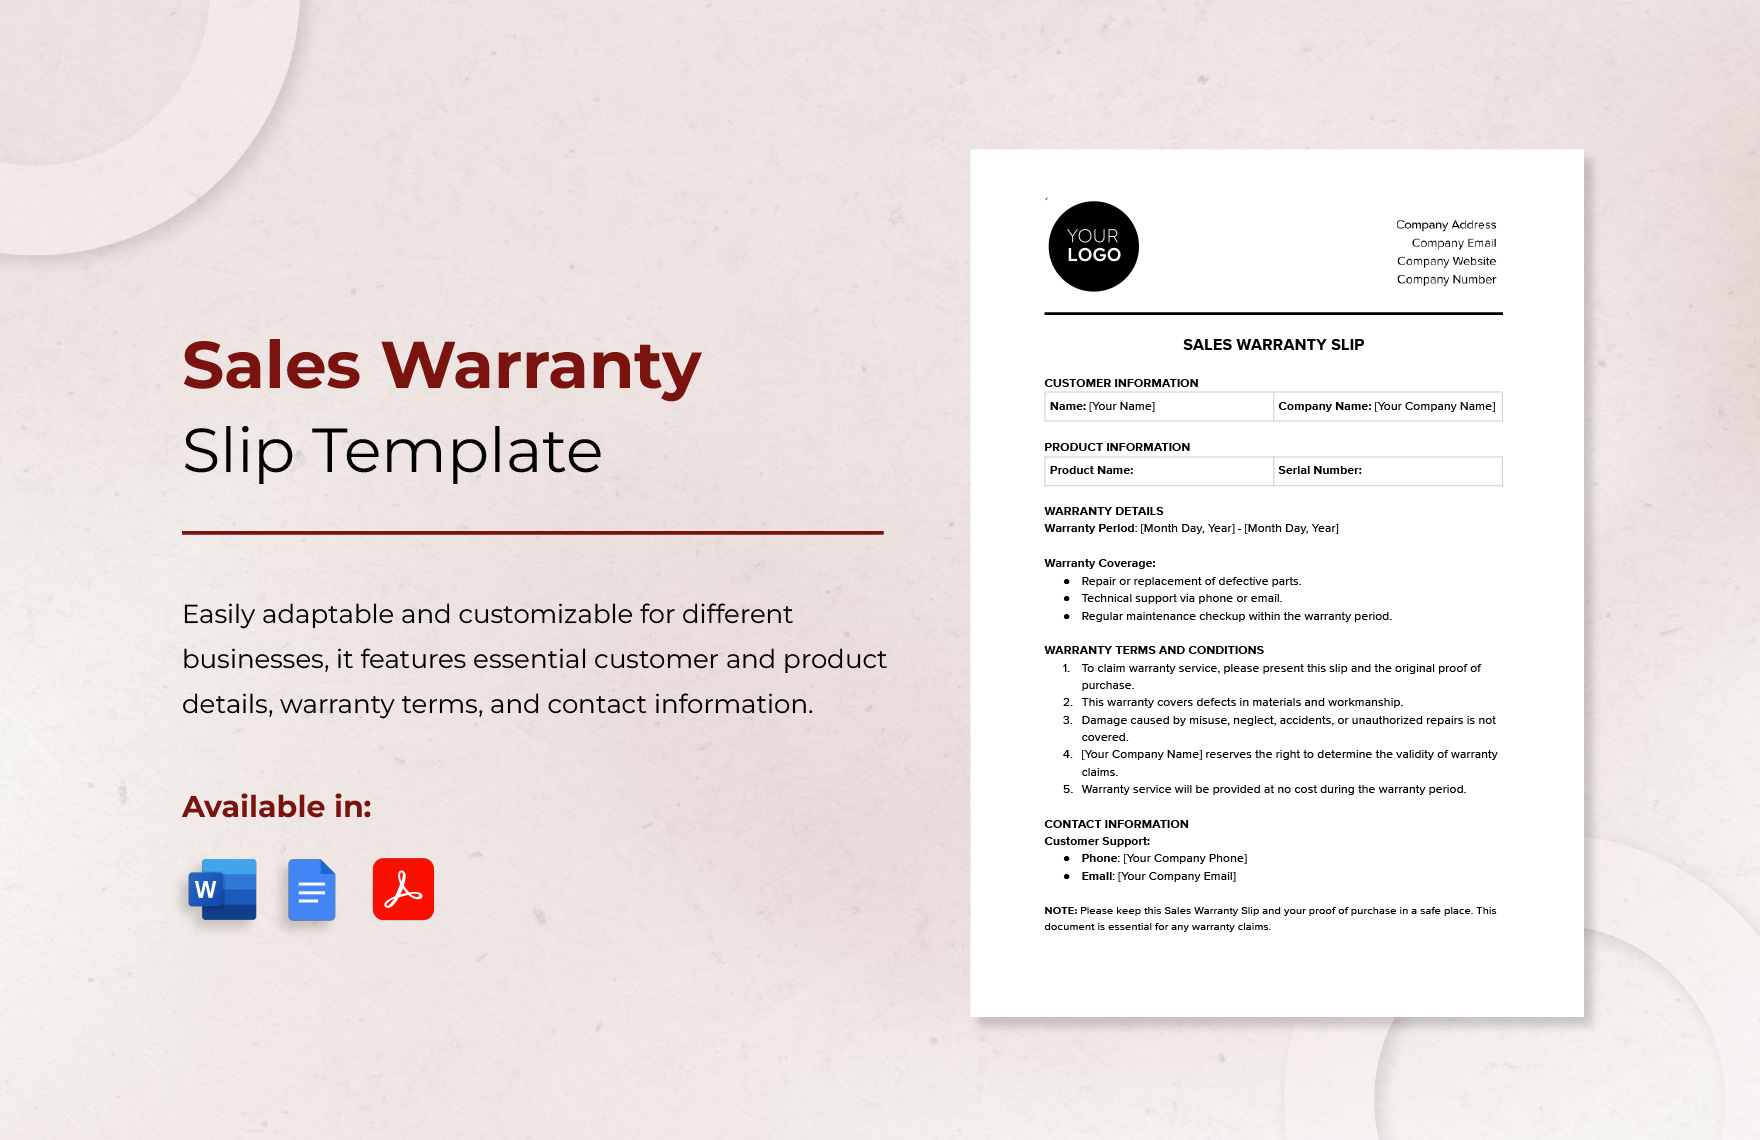 Sales Warranty Slip Template in Word, Google Docs, PDF